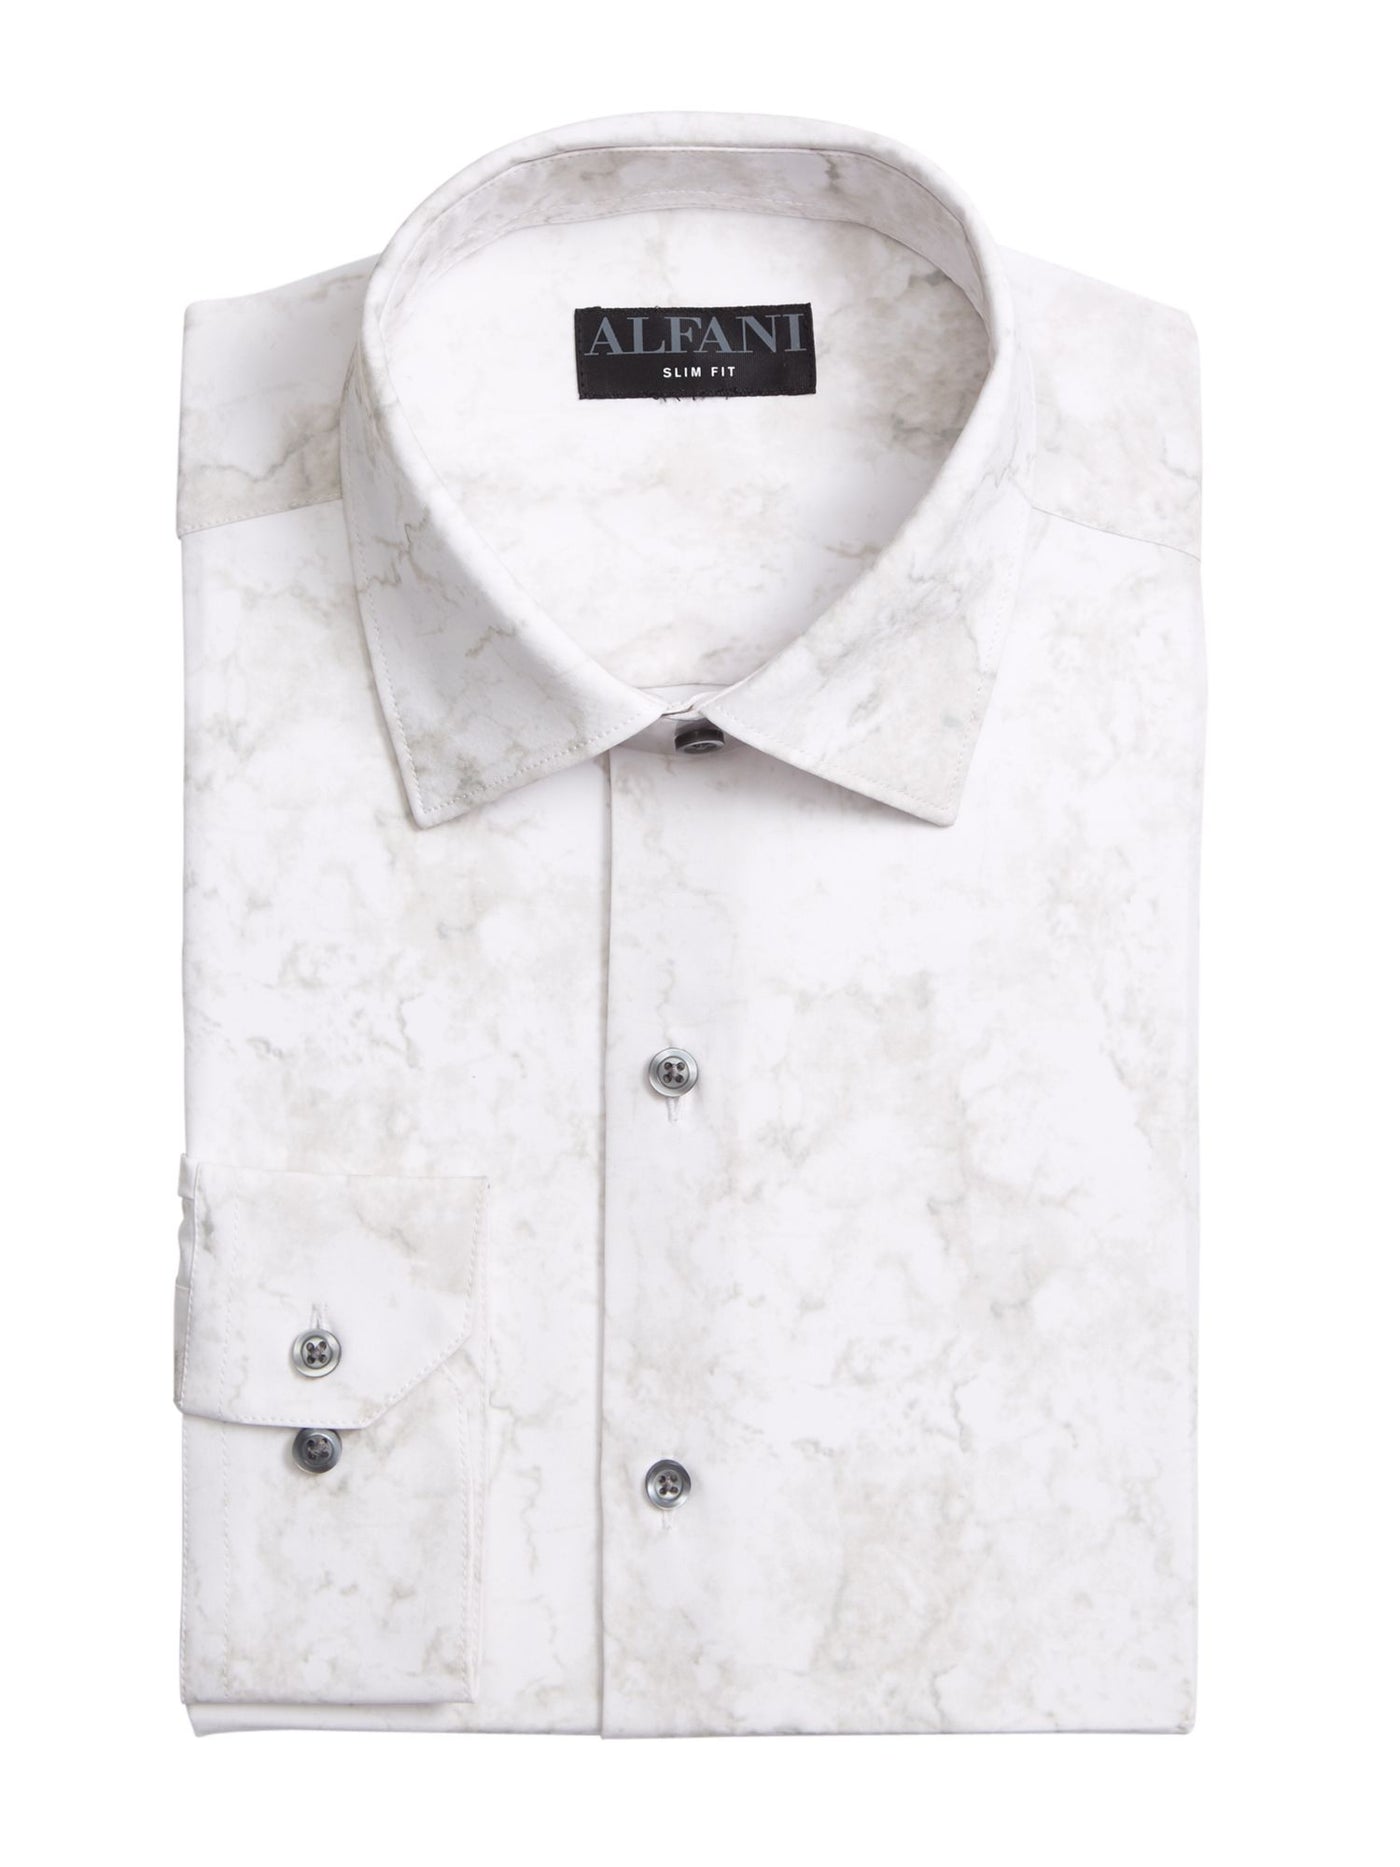 ALFANI Mens White Collared Slim Fit Shirt 17/17.5- 34-35